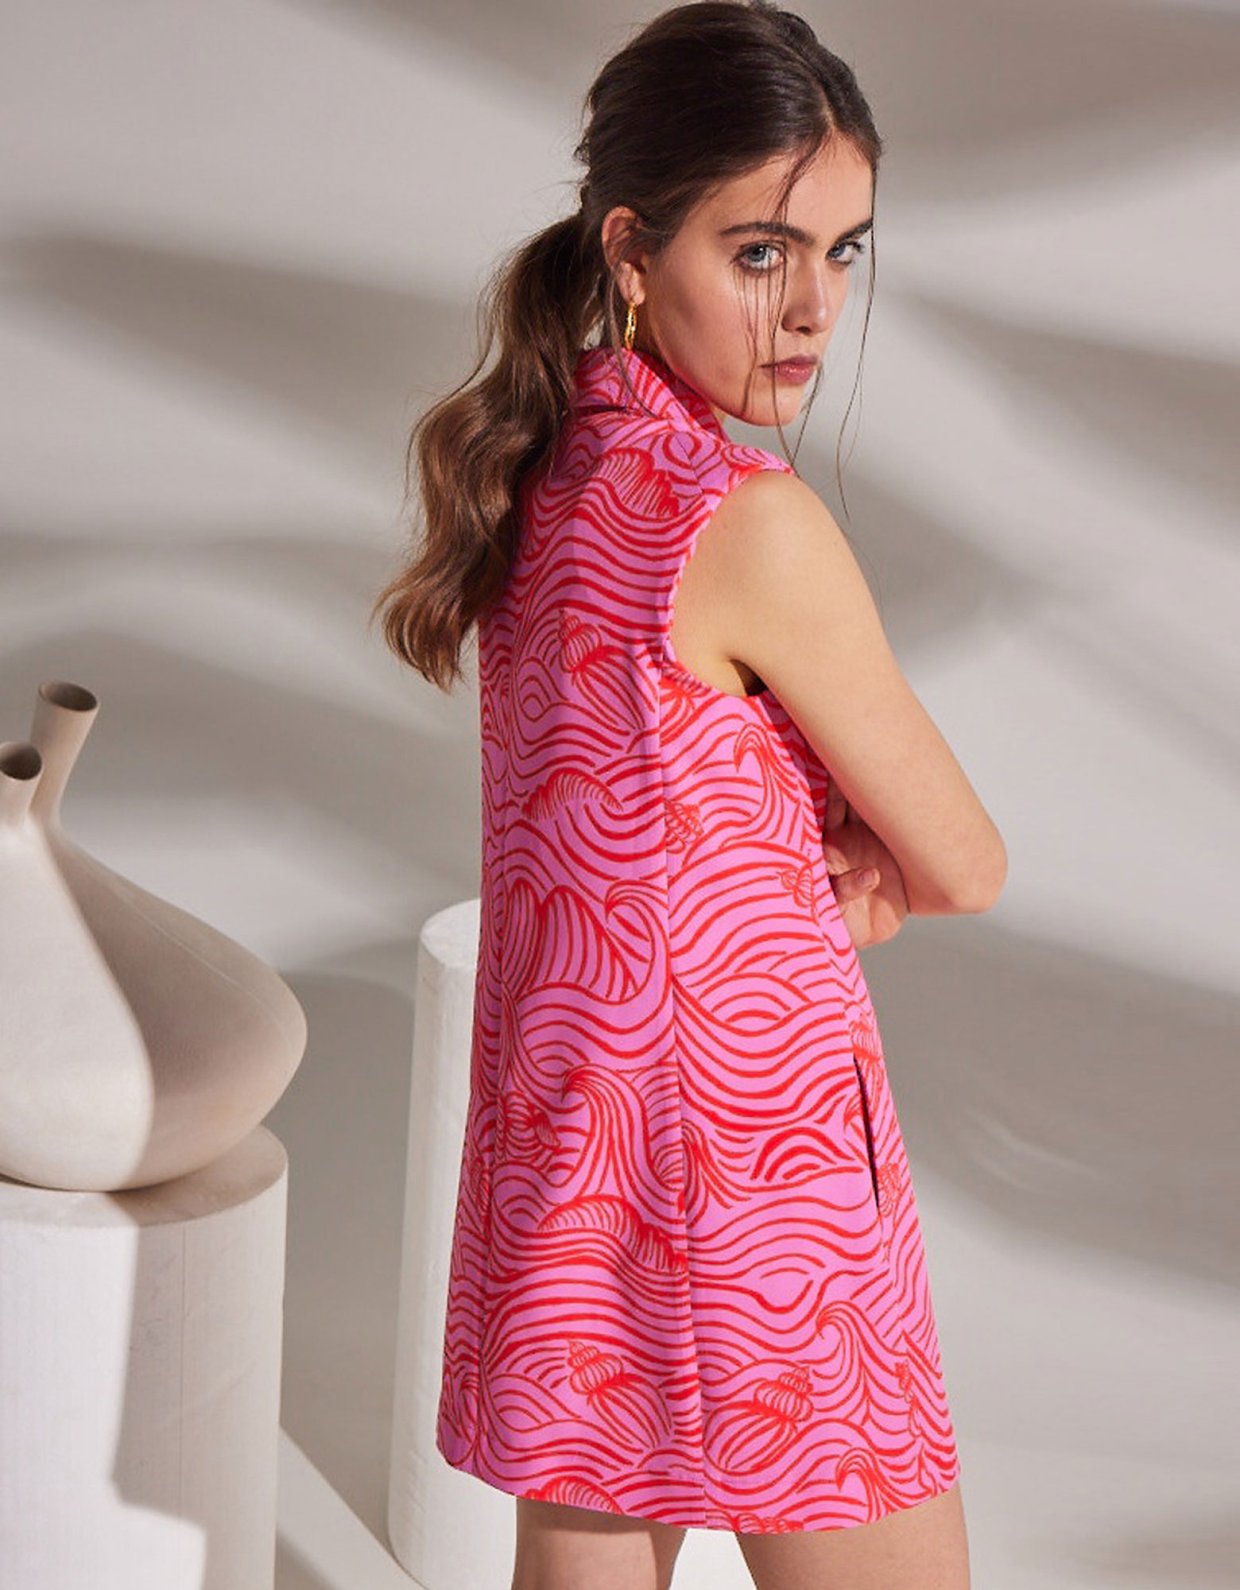 The Knl's Paua printed blazer-dress pink waves